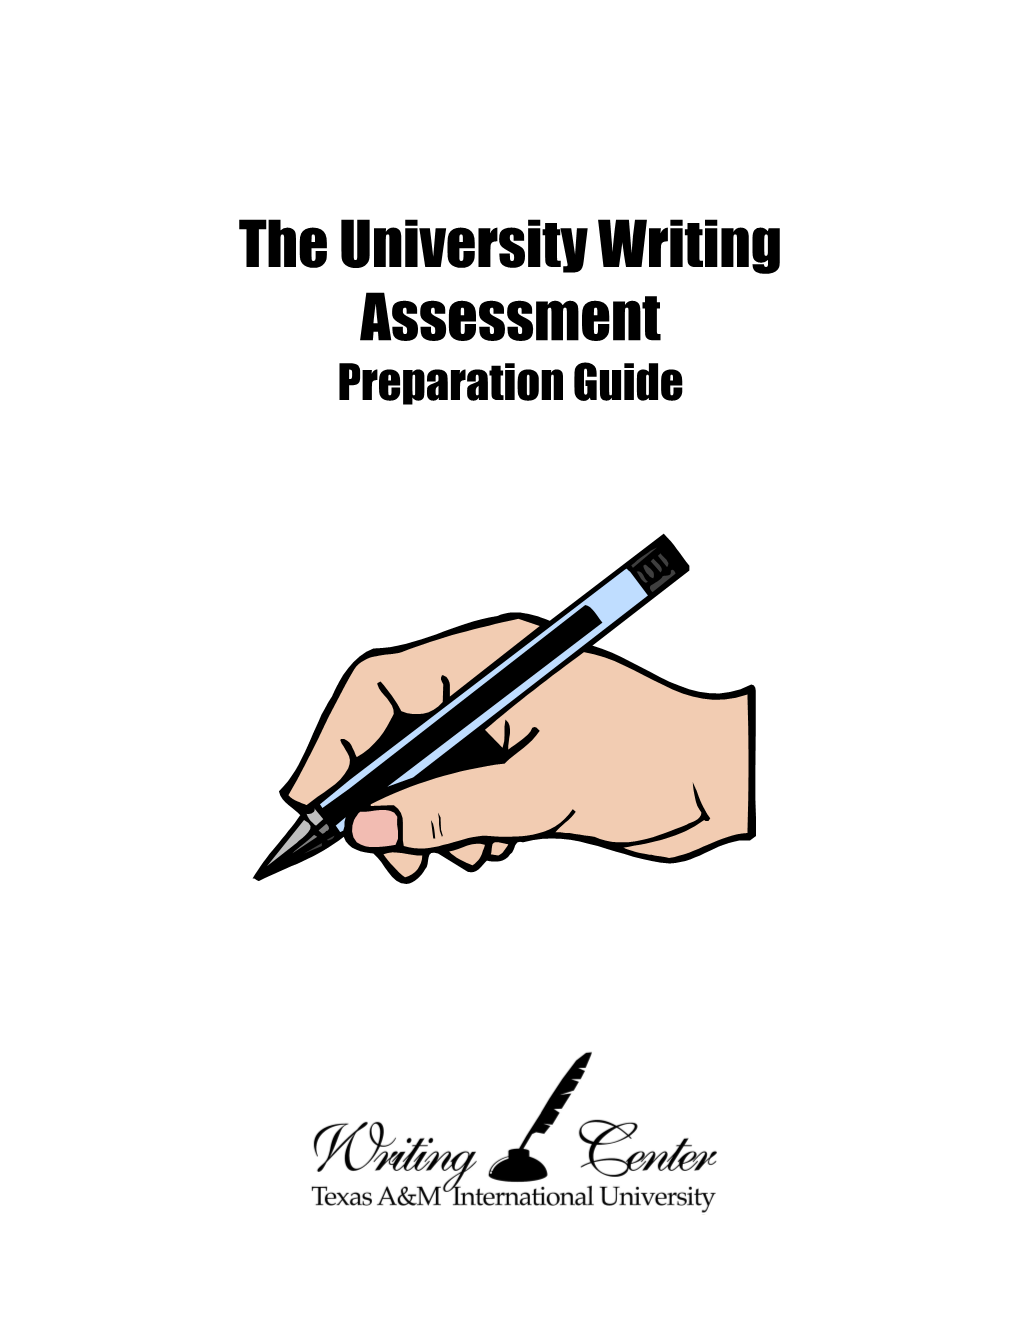 The University Writing Assessment